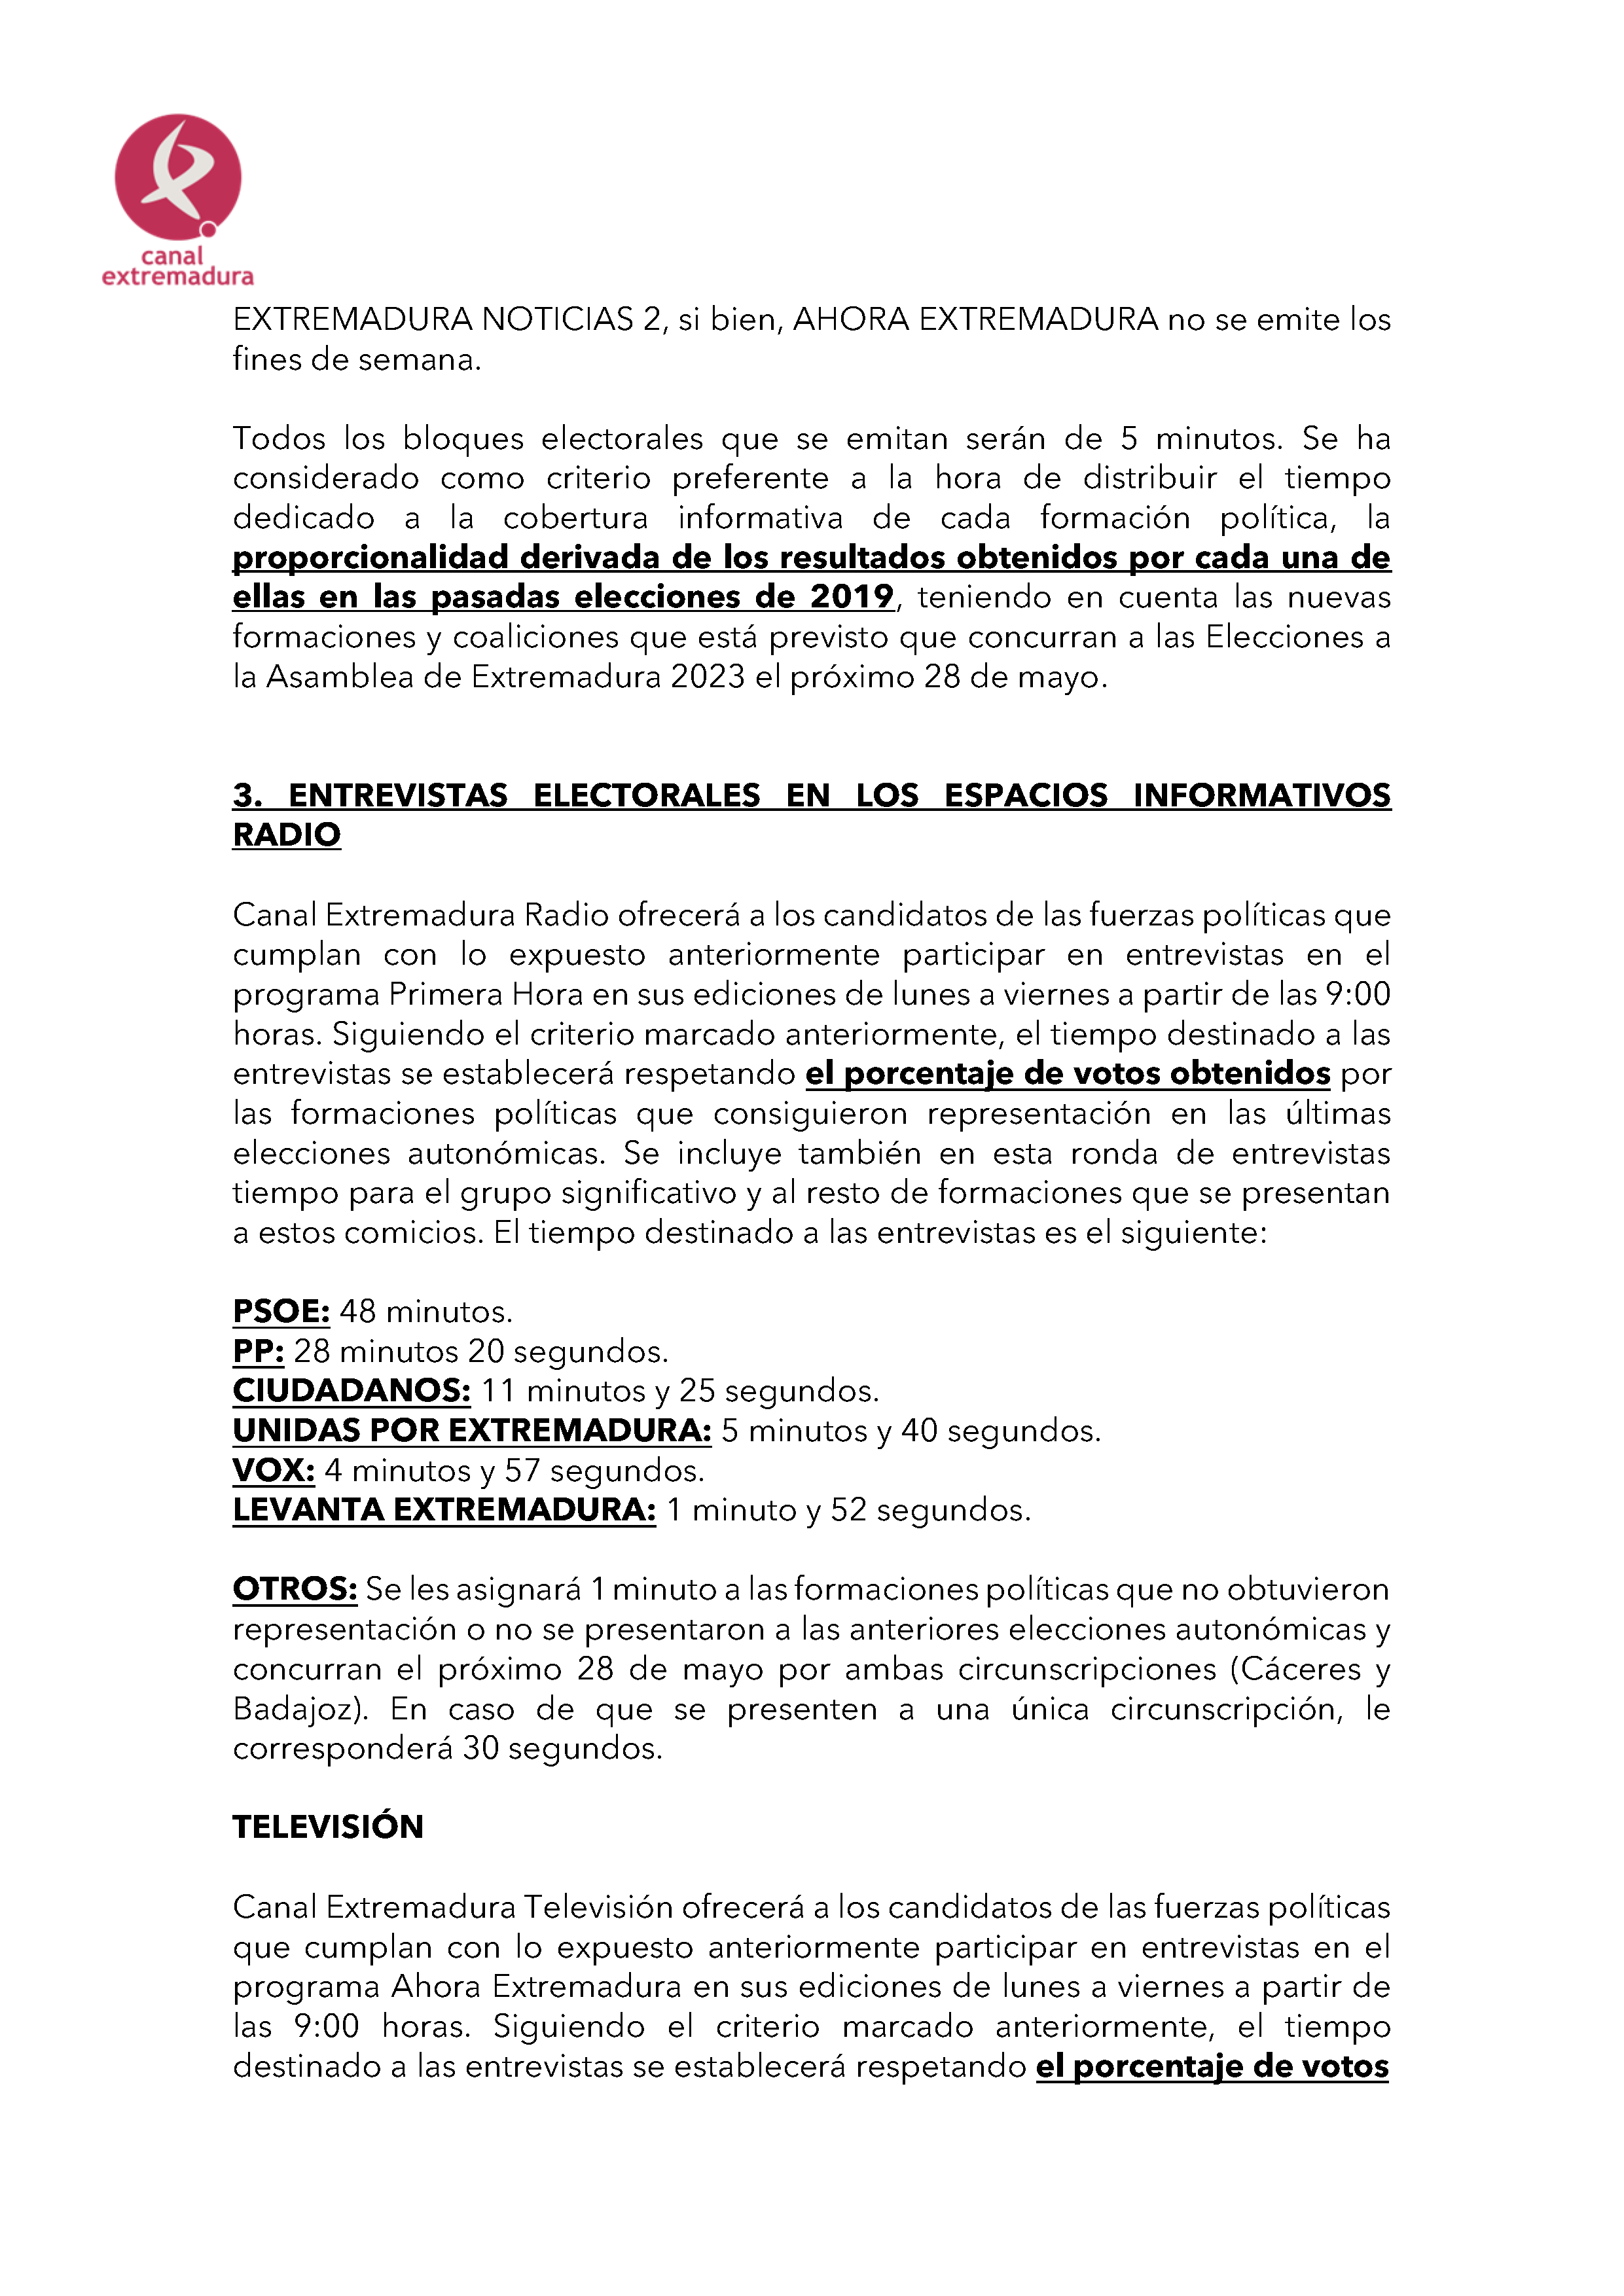 PLAN DE COBERTURA INFORMATIVA DE CANAL EXTREMADURA Pag 6